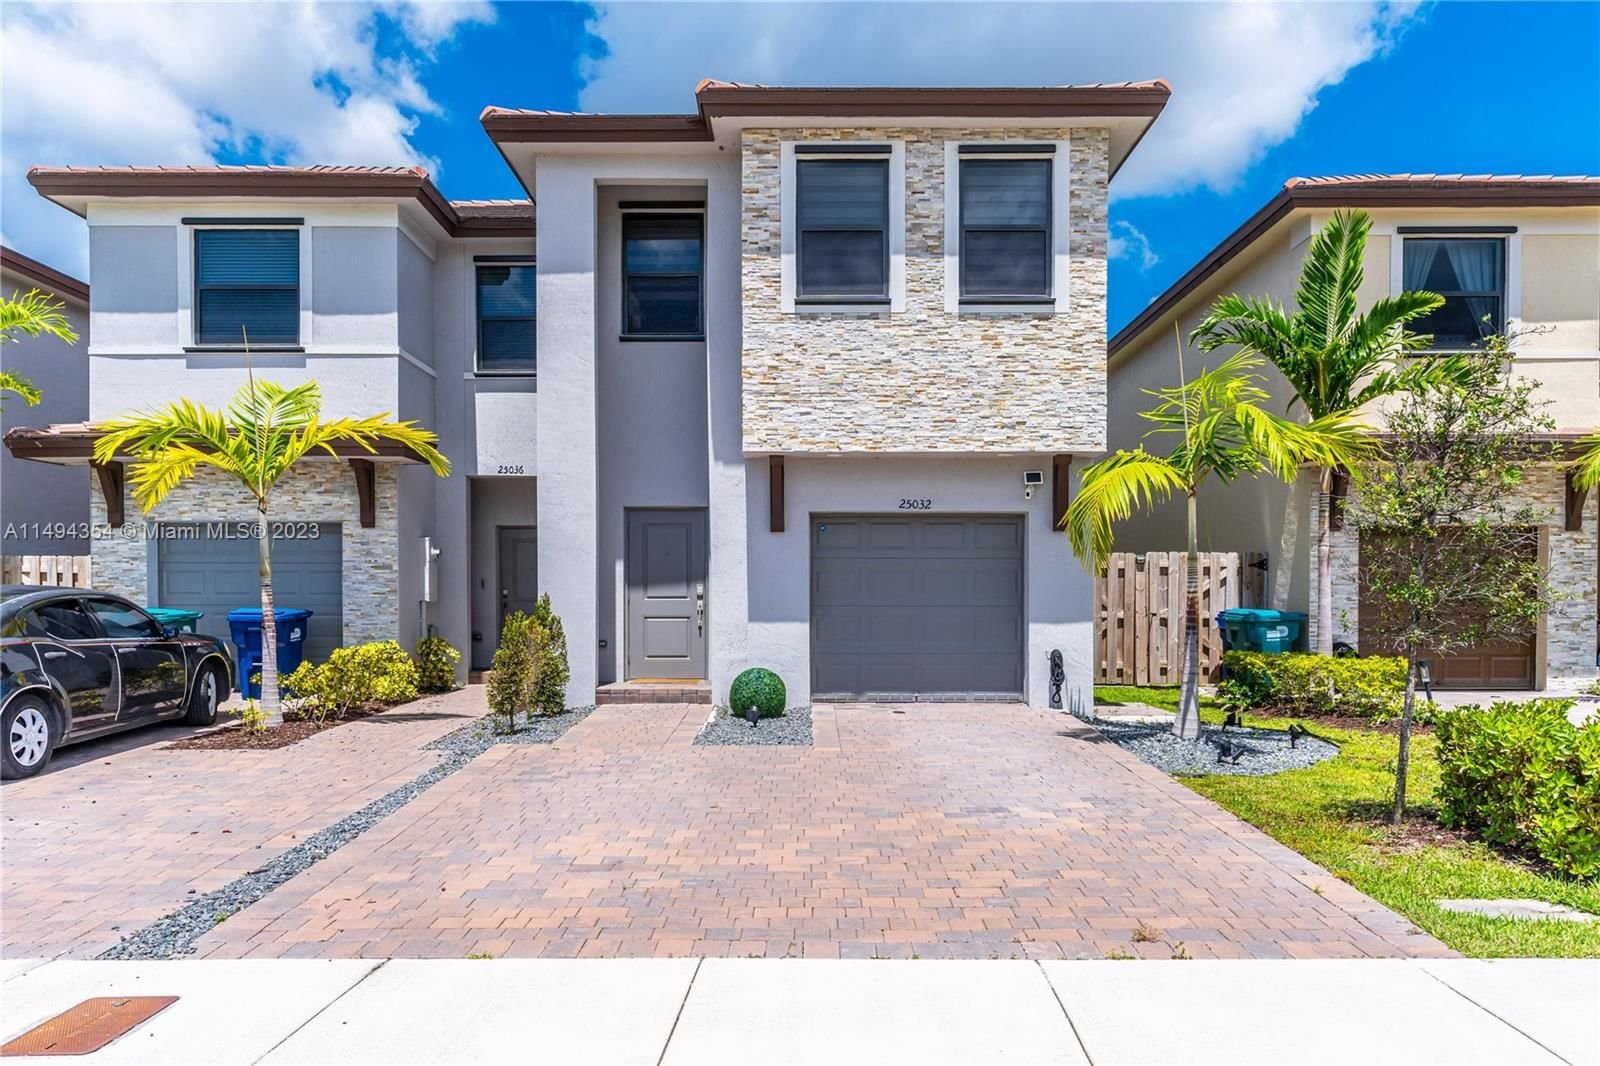 Real estate property located at 25032 107th Ave, Miami-Dade County, ALLAPATTAH GDNS, Homestead, FL